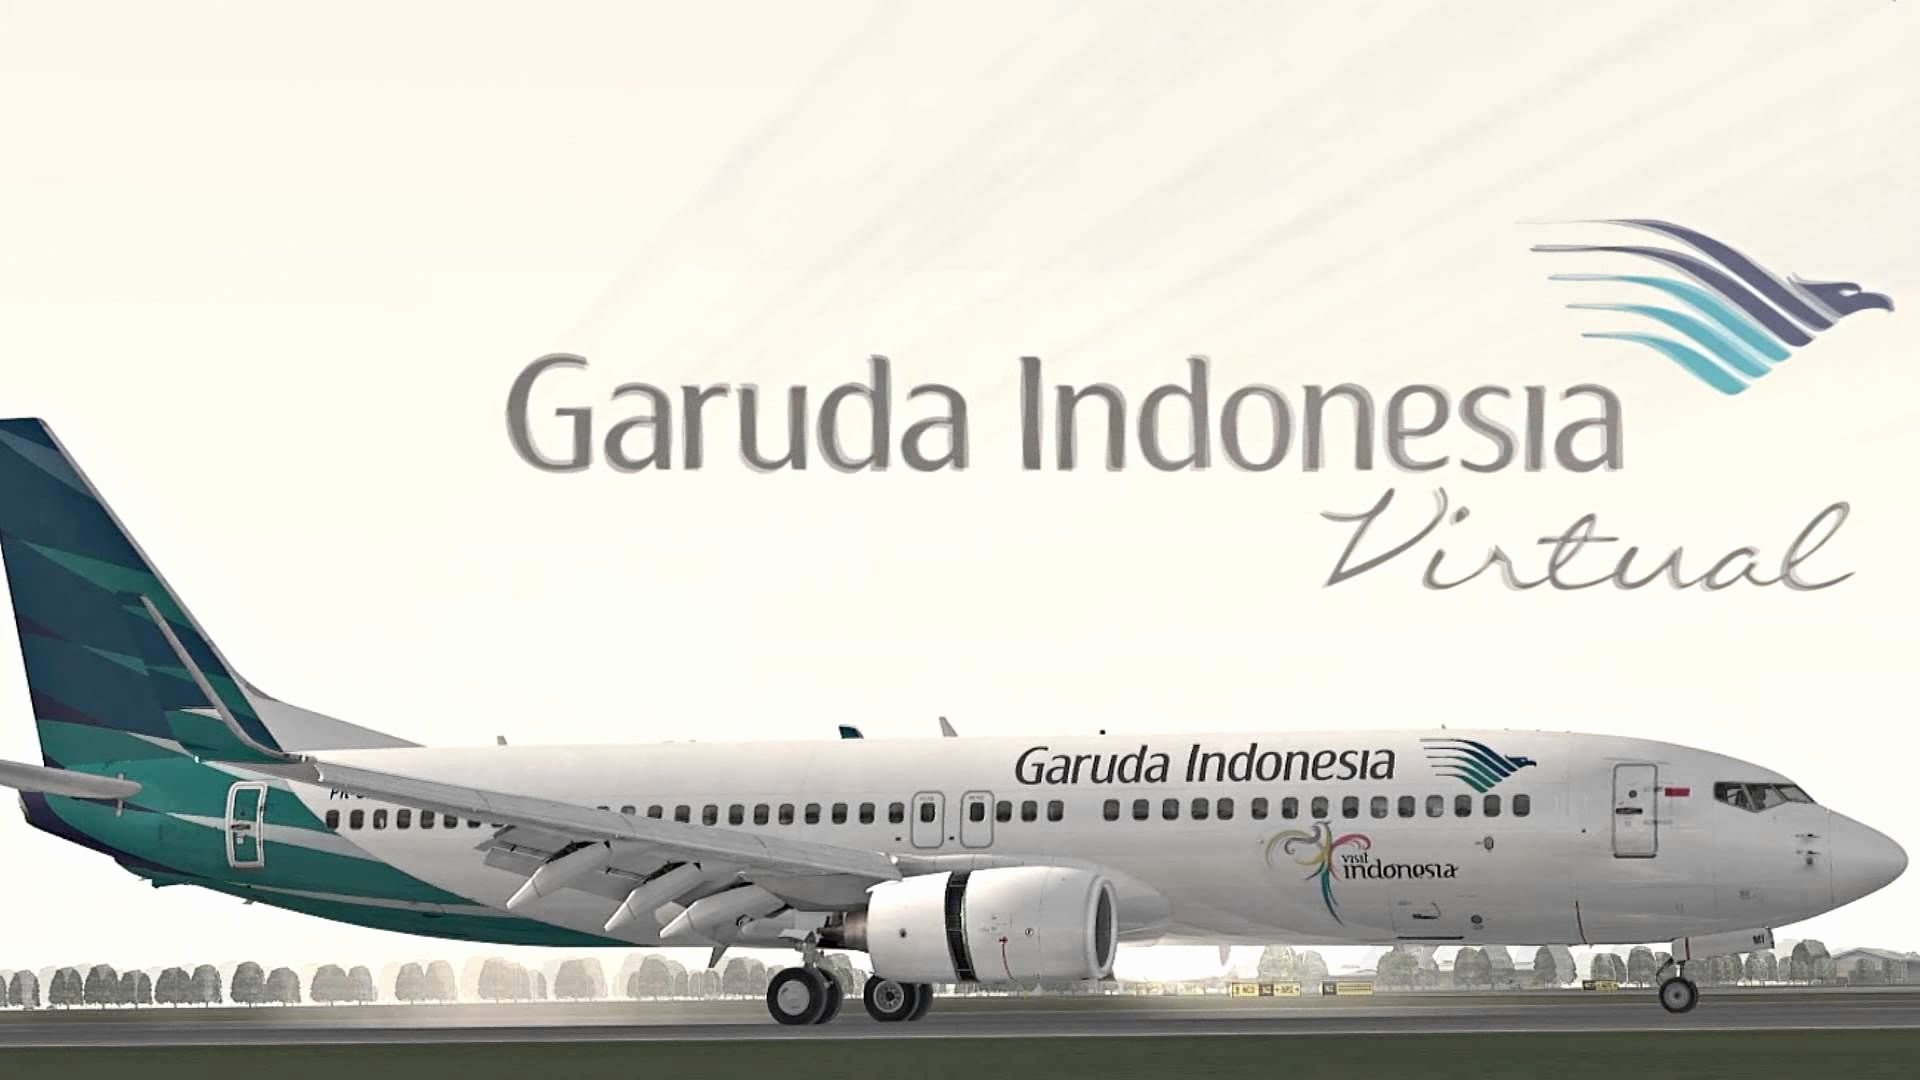 Garuda Indonesia Wallpaper Free Garuda Indonesia